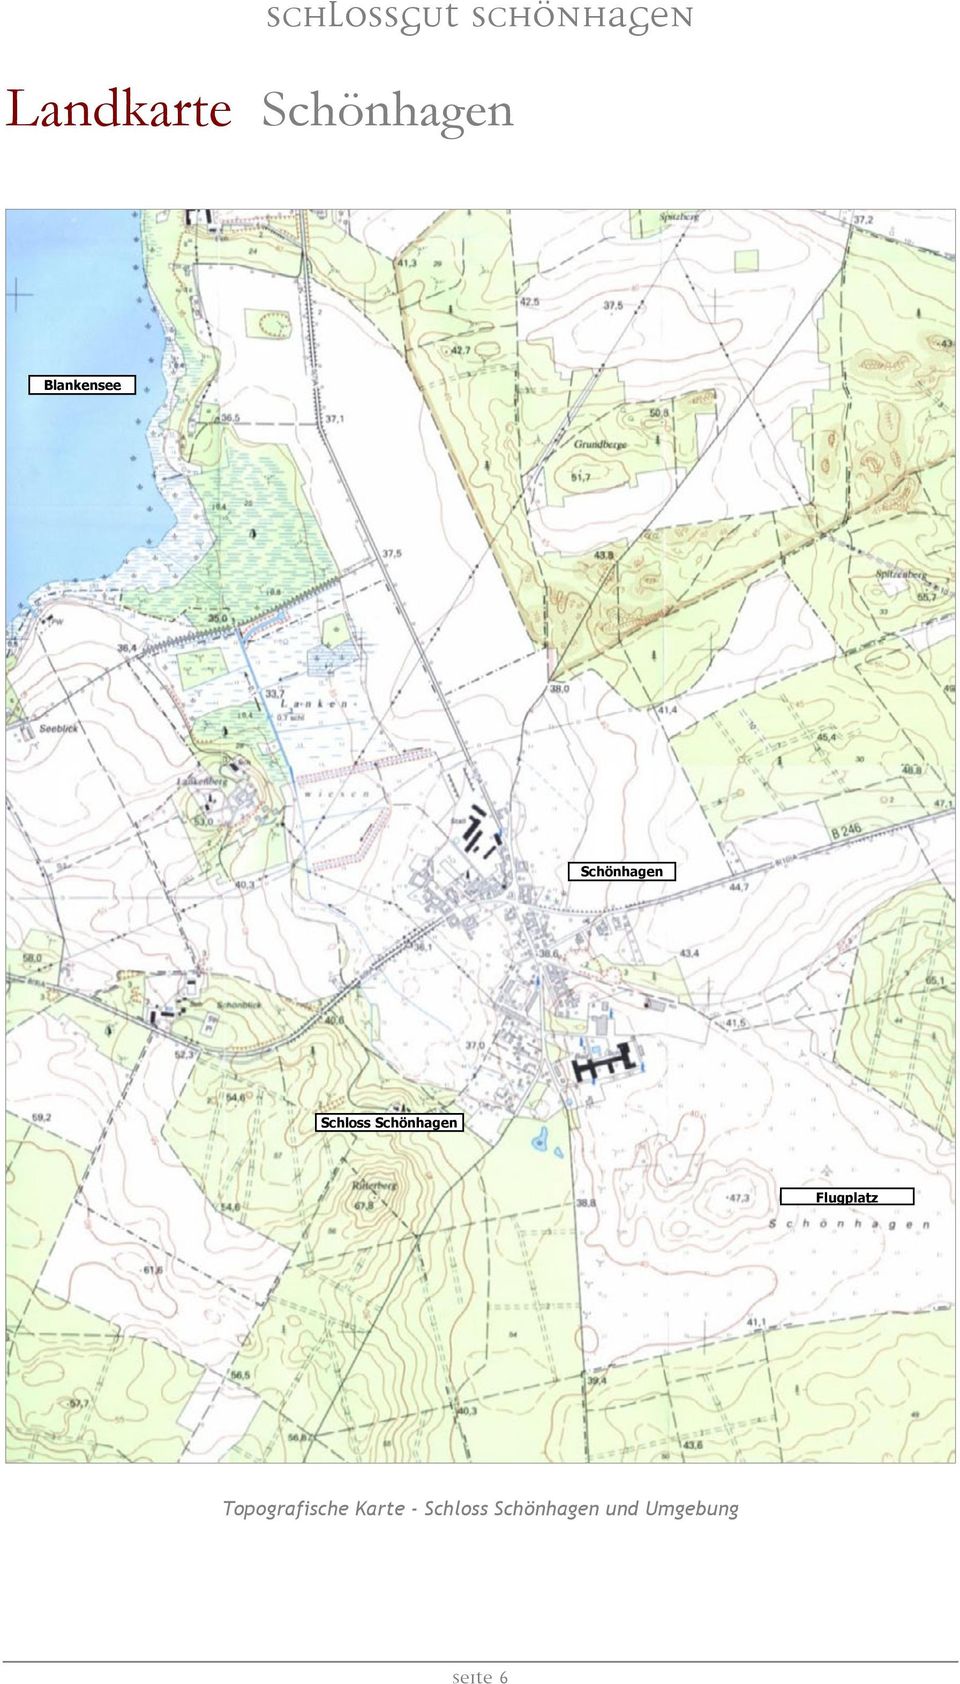 Flugplatz Topografische Karte -